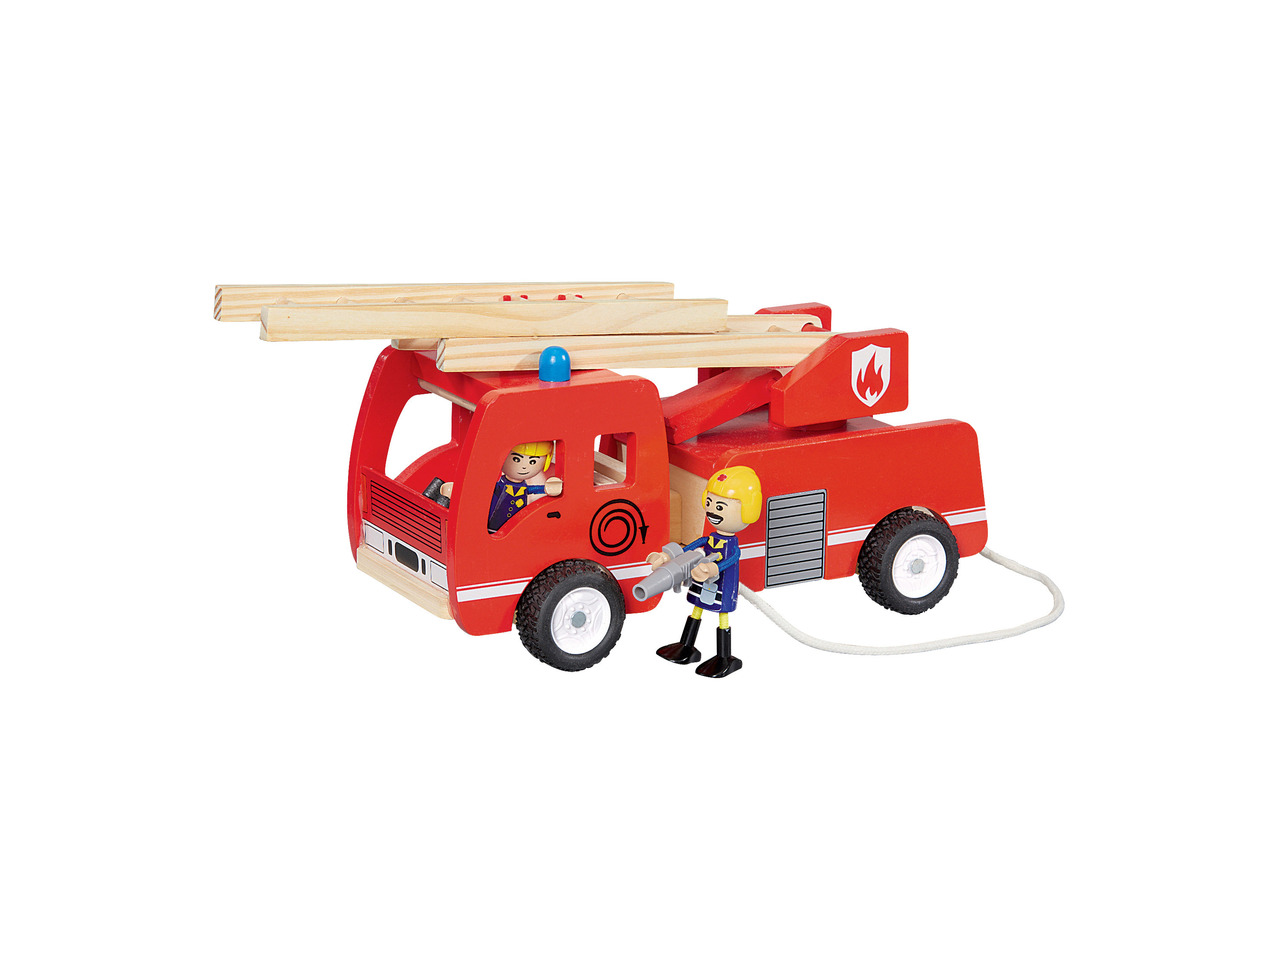 PLAYTIVE JUNIOR Wooden Toy Vehicle